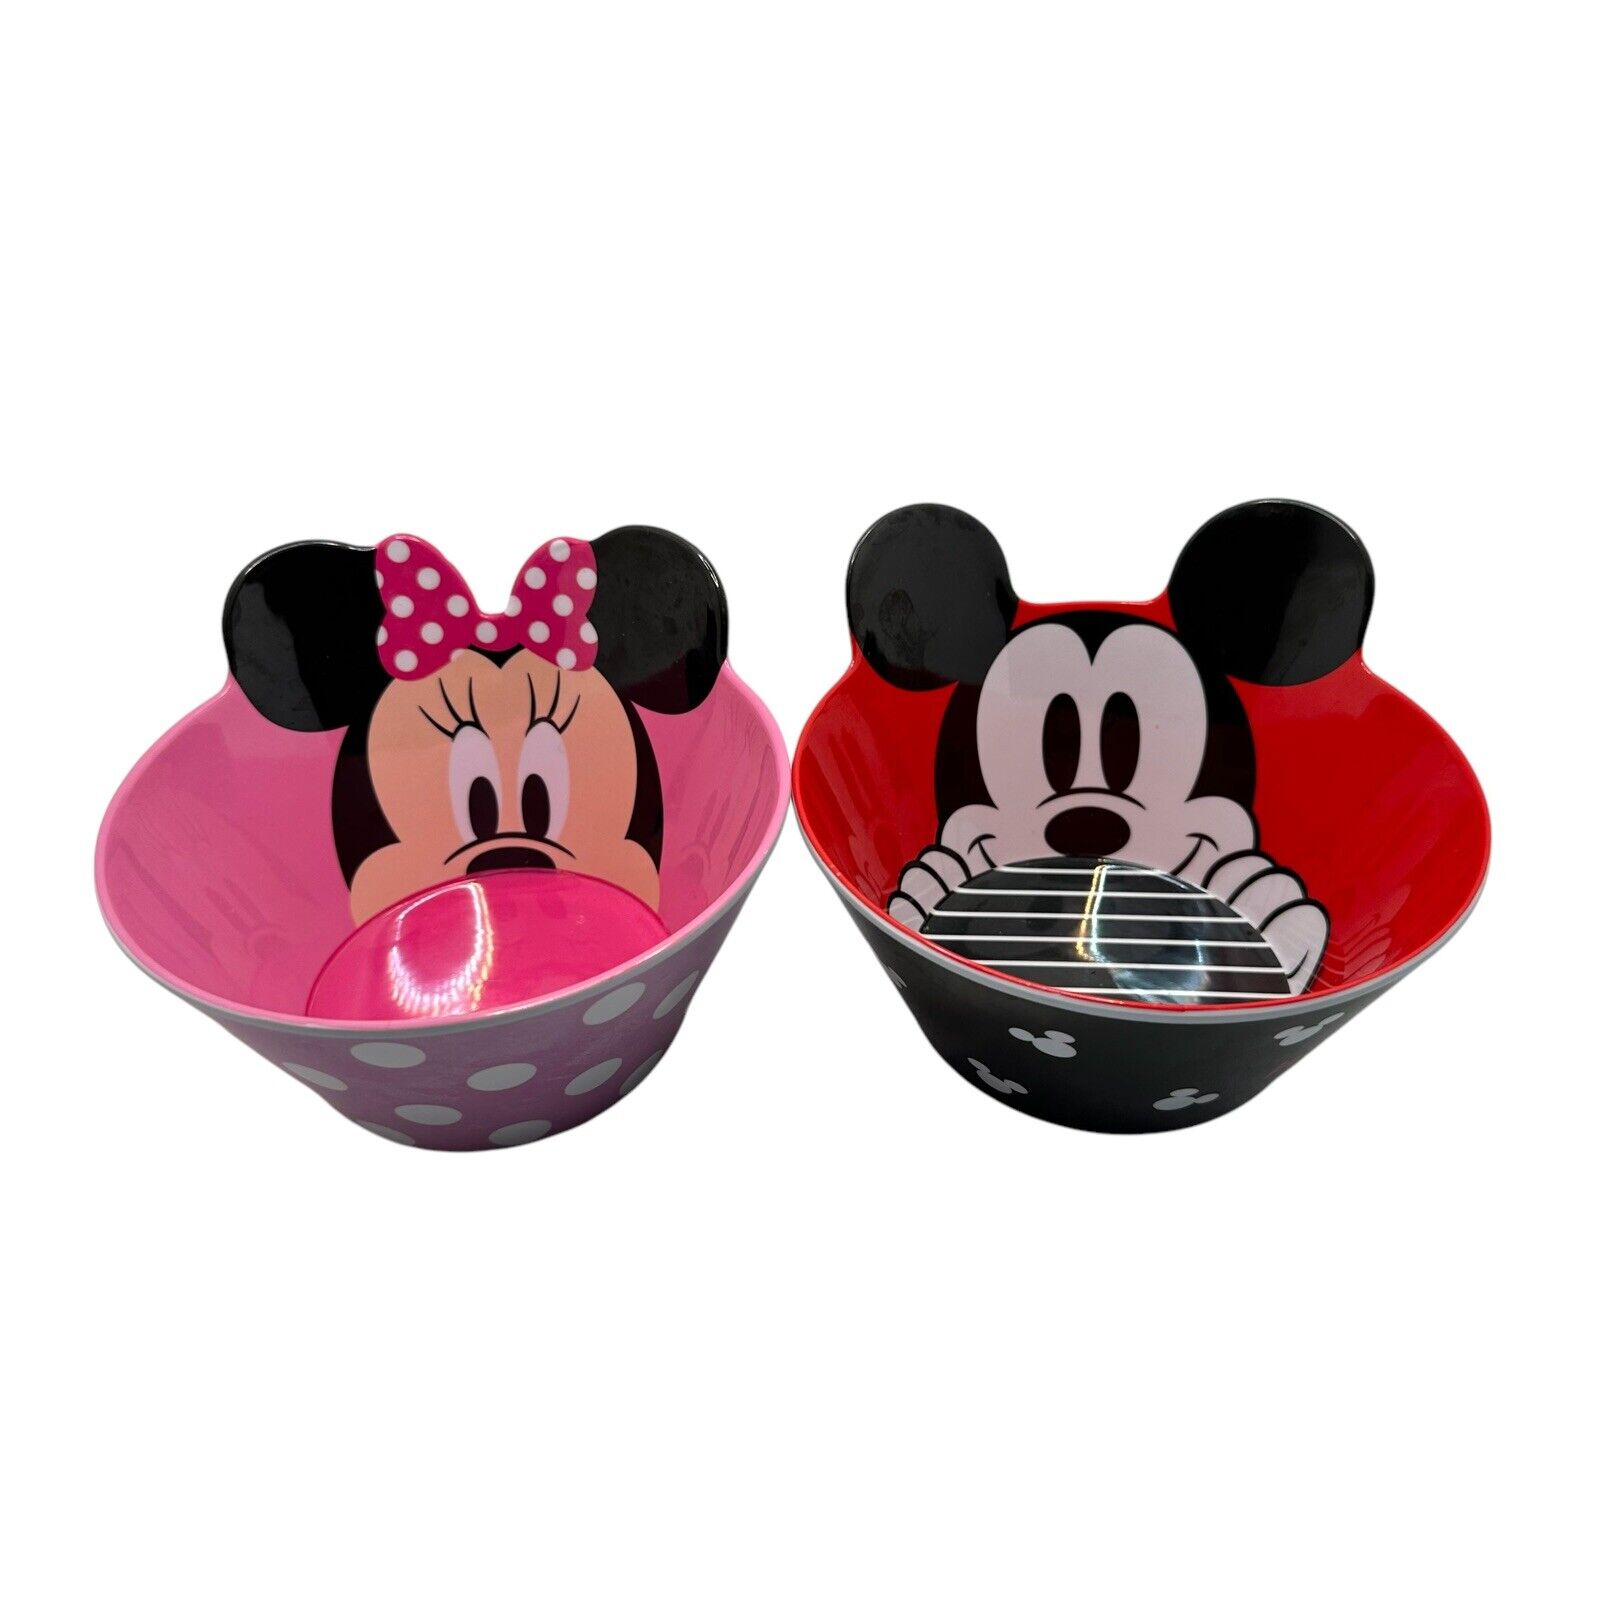 Disney Mickey & Minnie Mouse Melamine Bowls Pair by Zak Designs